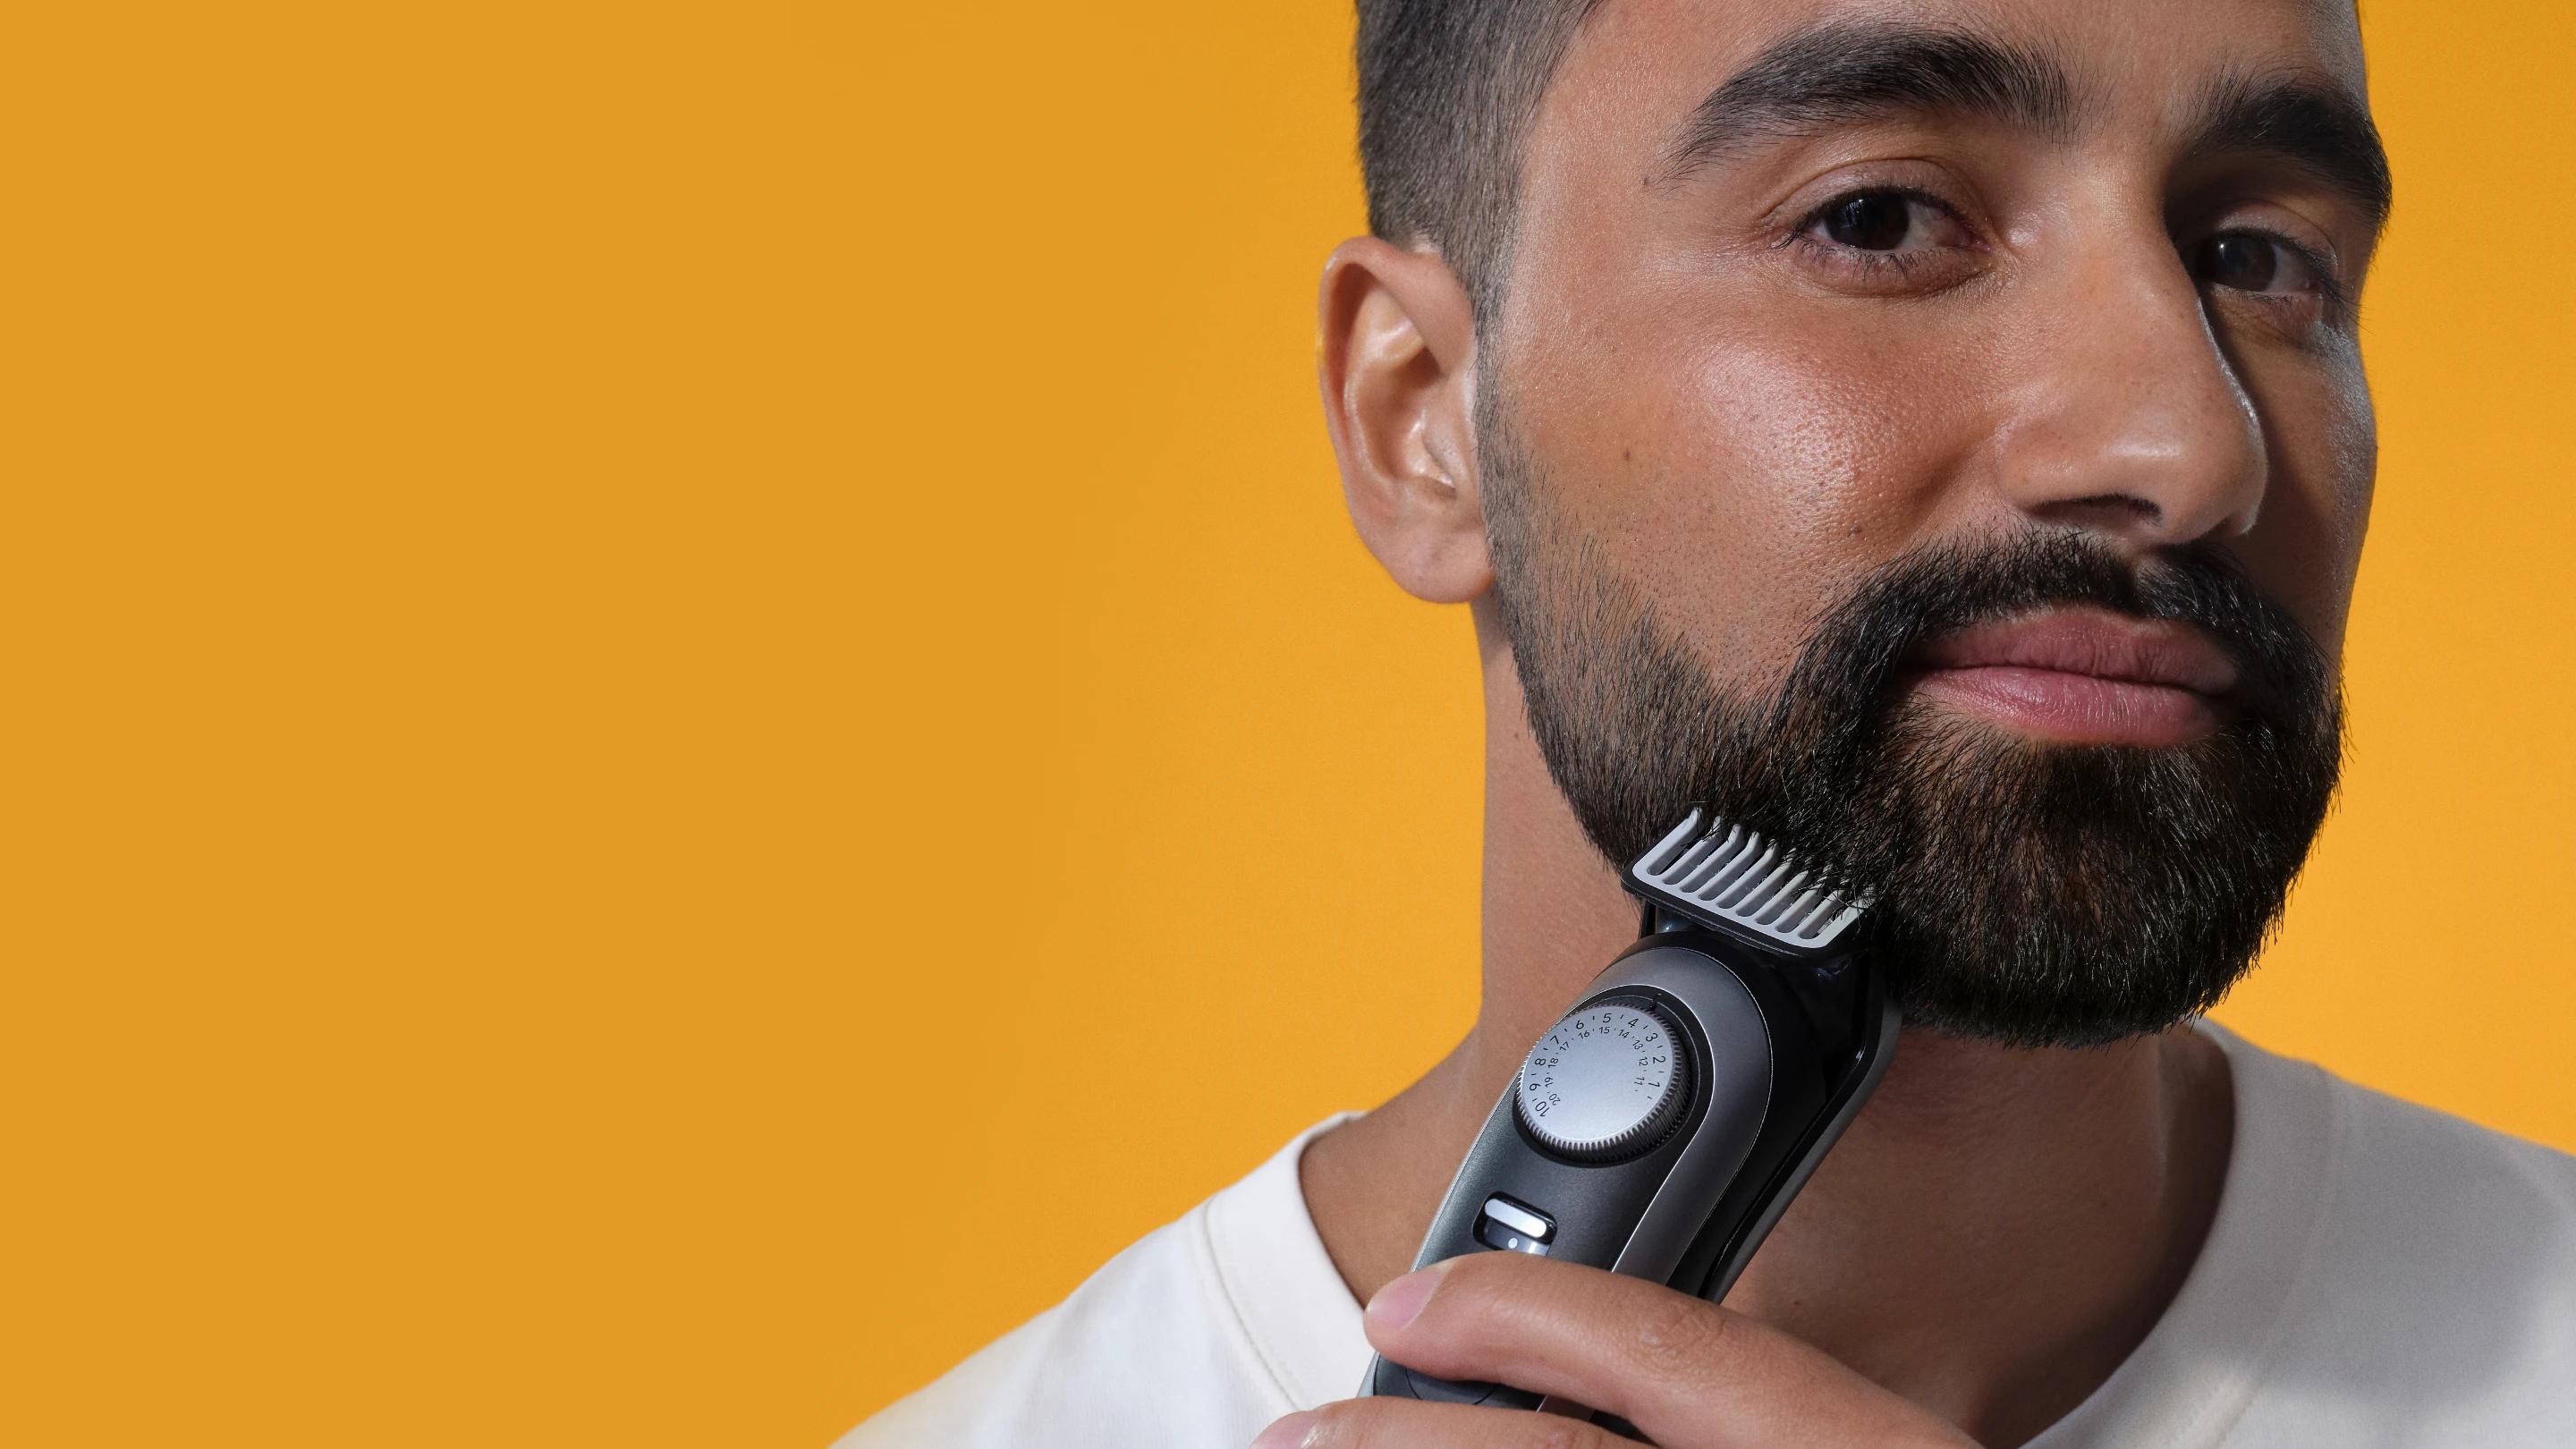 Man using Beard trimmer on beard